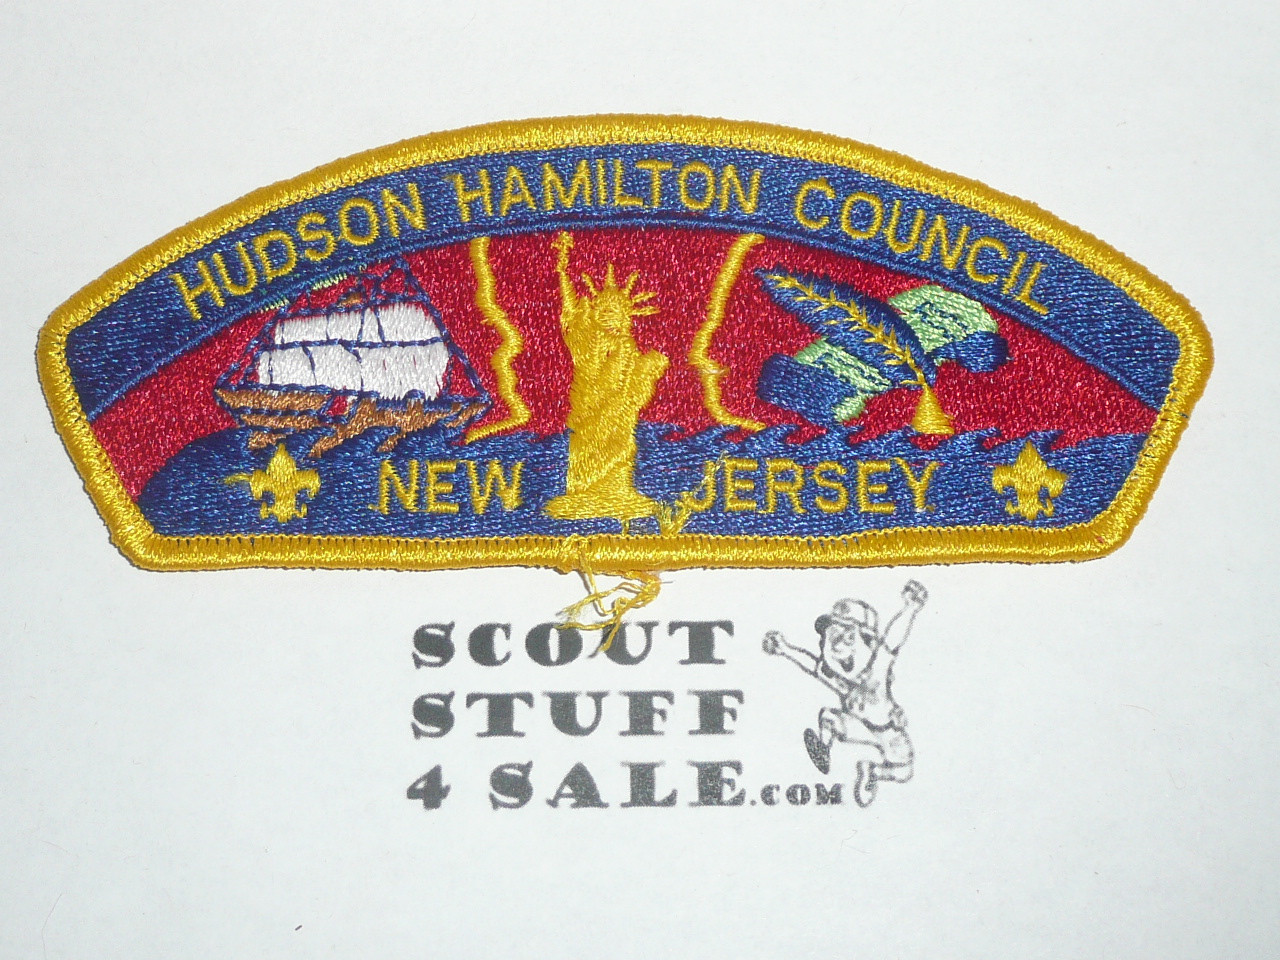 Hudson Hamilton Council sa4 CSP - Scout